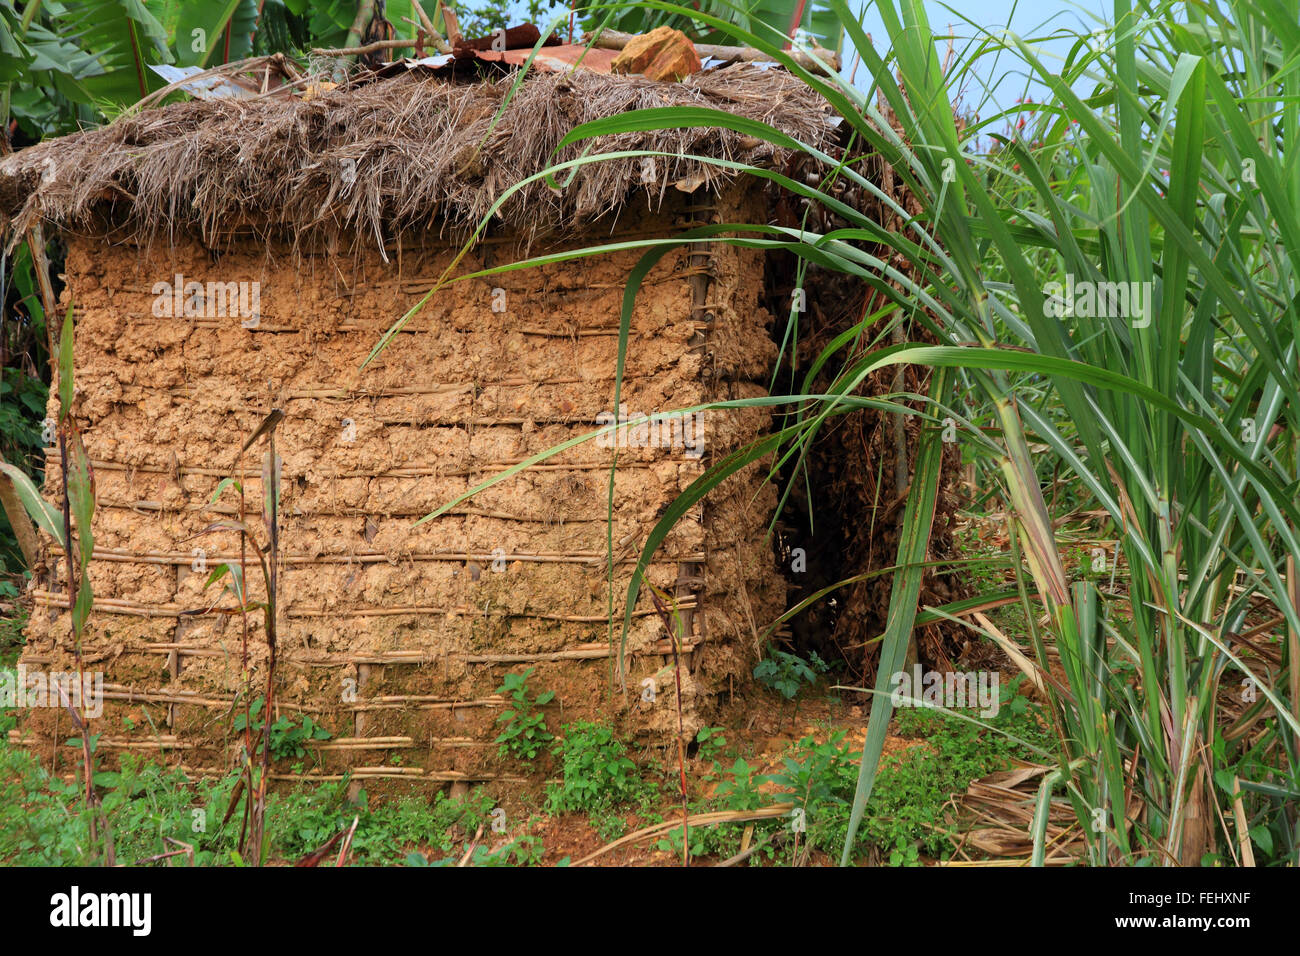 A small mud hut among tropical jungle grasses Stock Photo